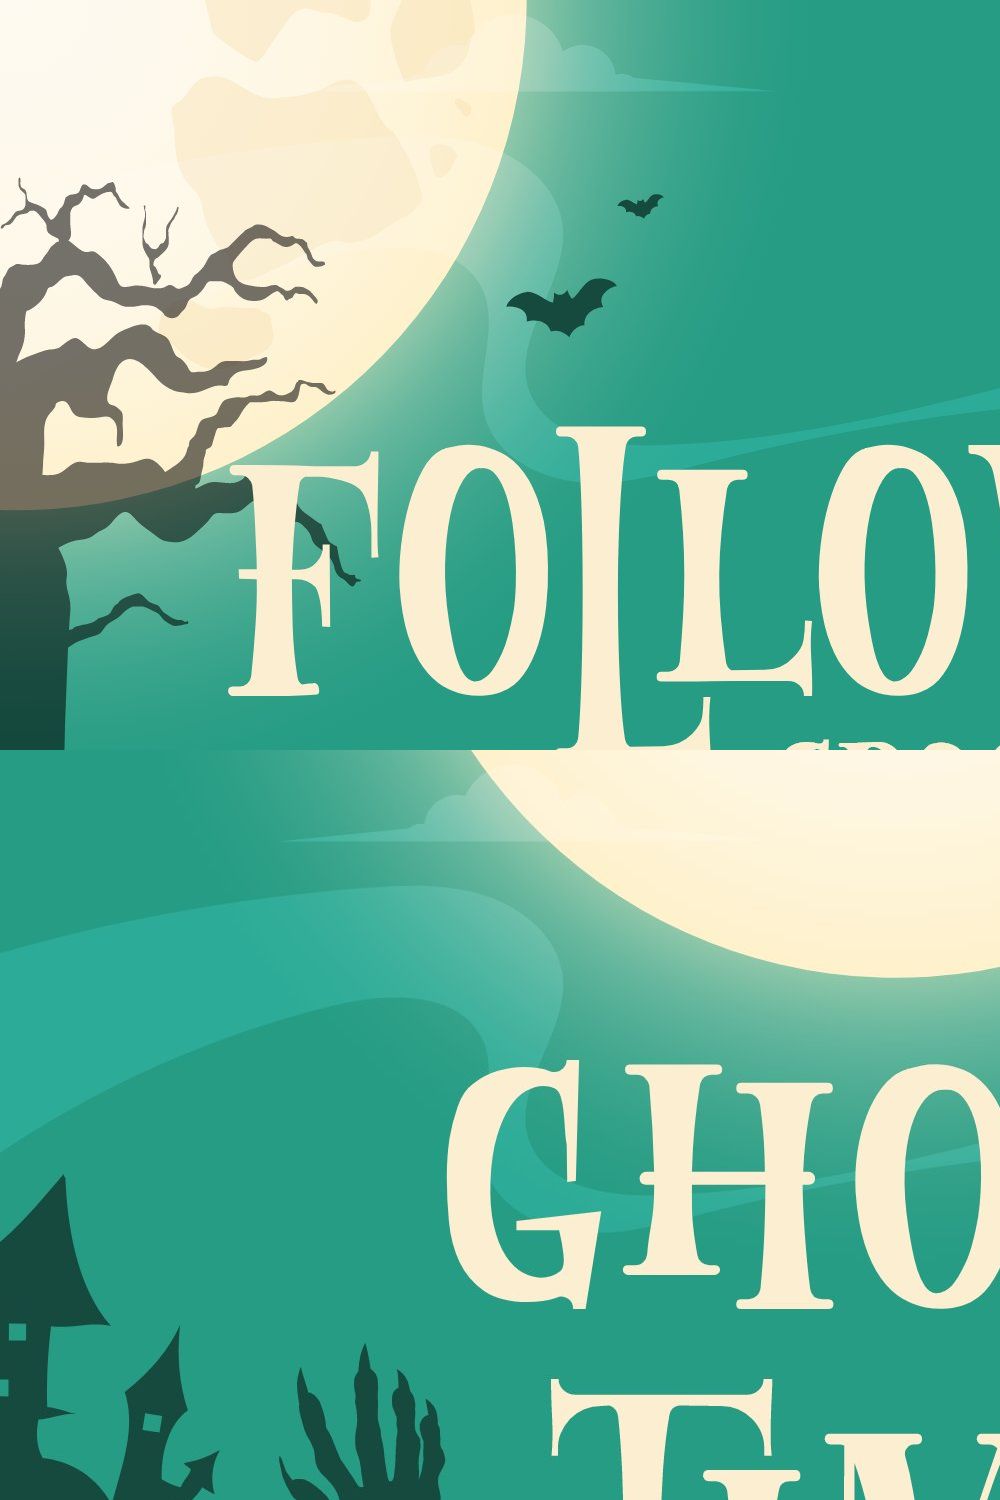 Follower Spooky halloween Font pinterest preview image.